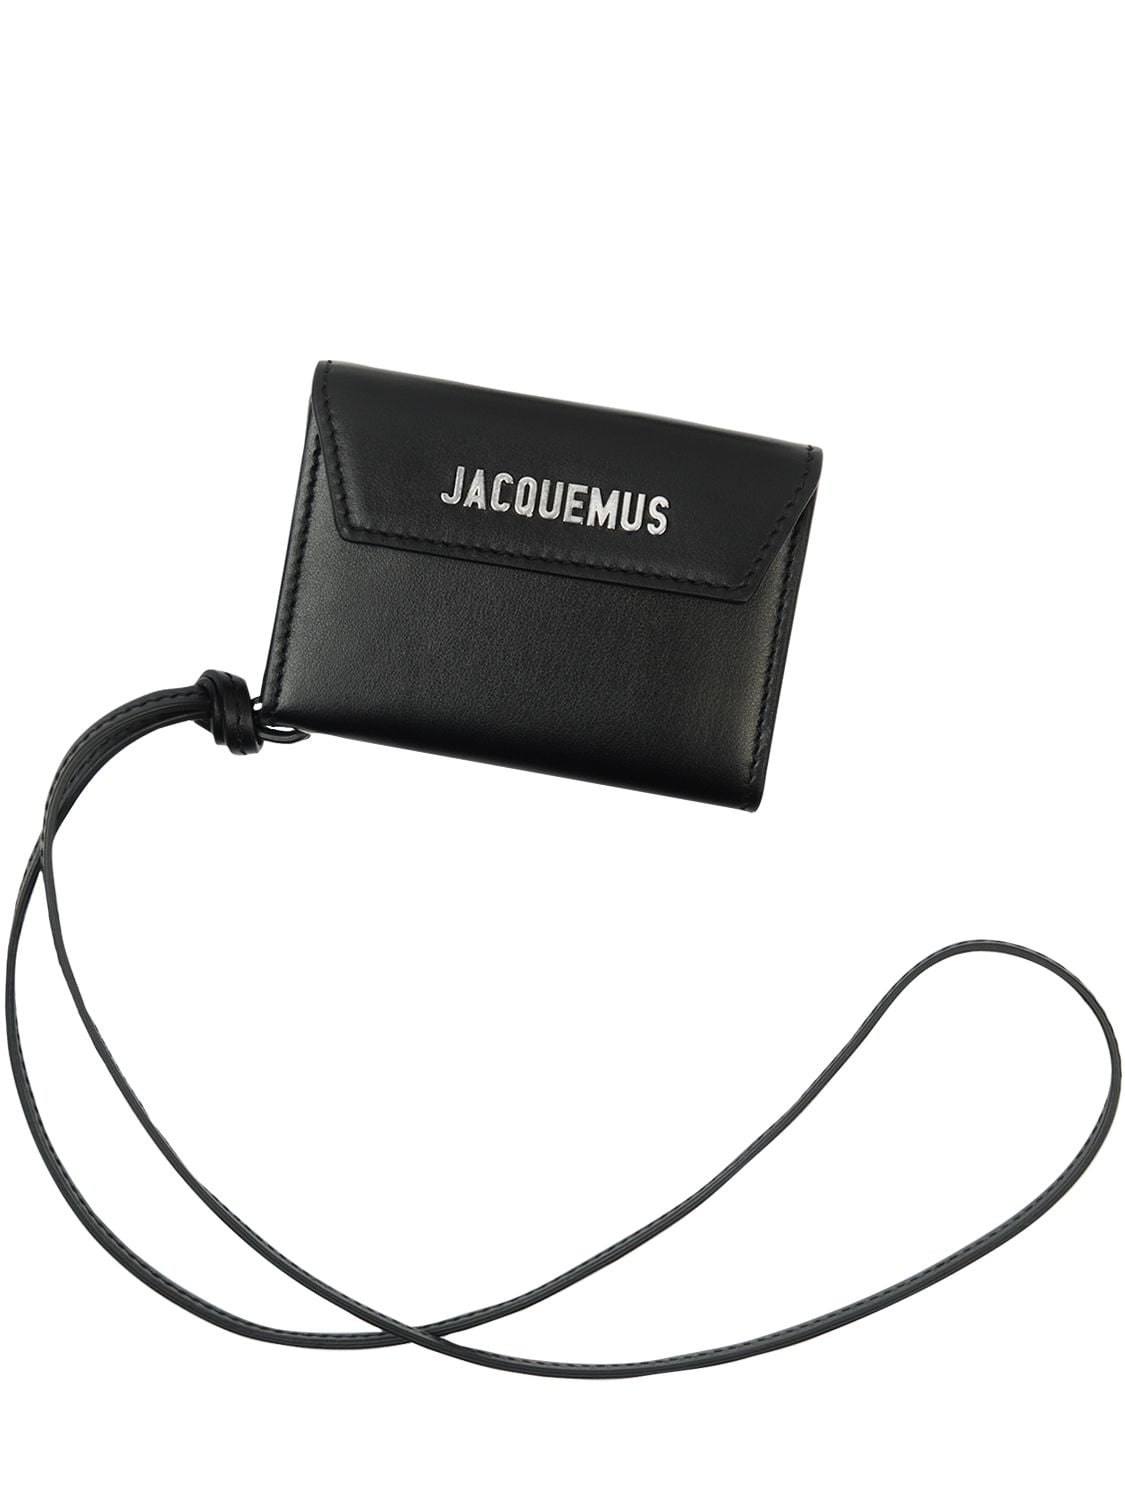 Jacquemus Le Porte  Leather Wallet In Black